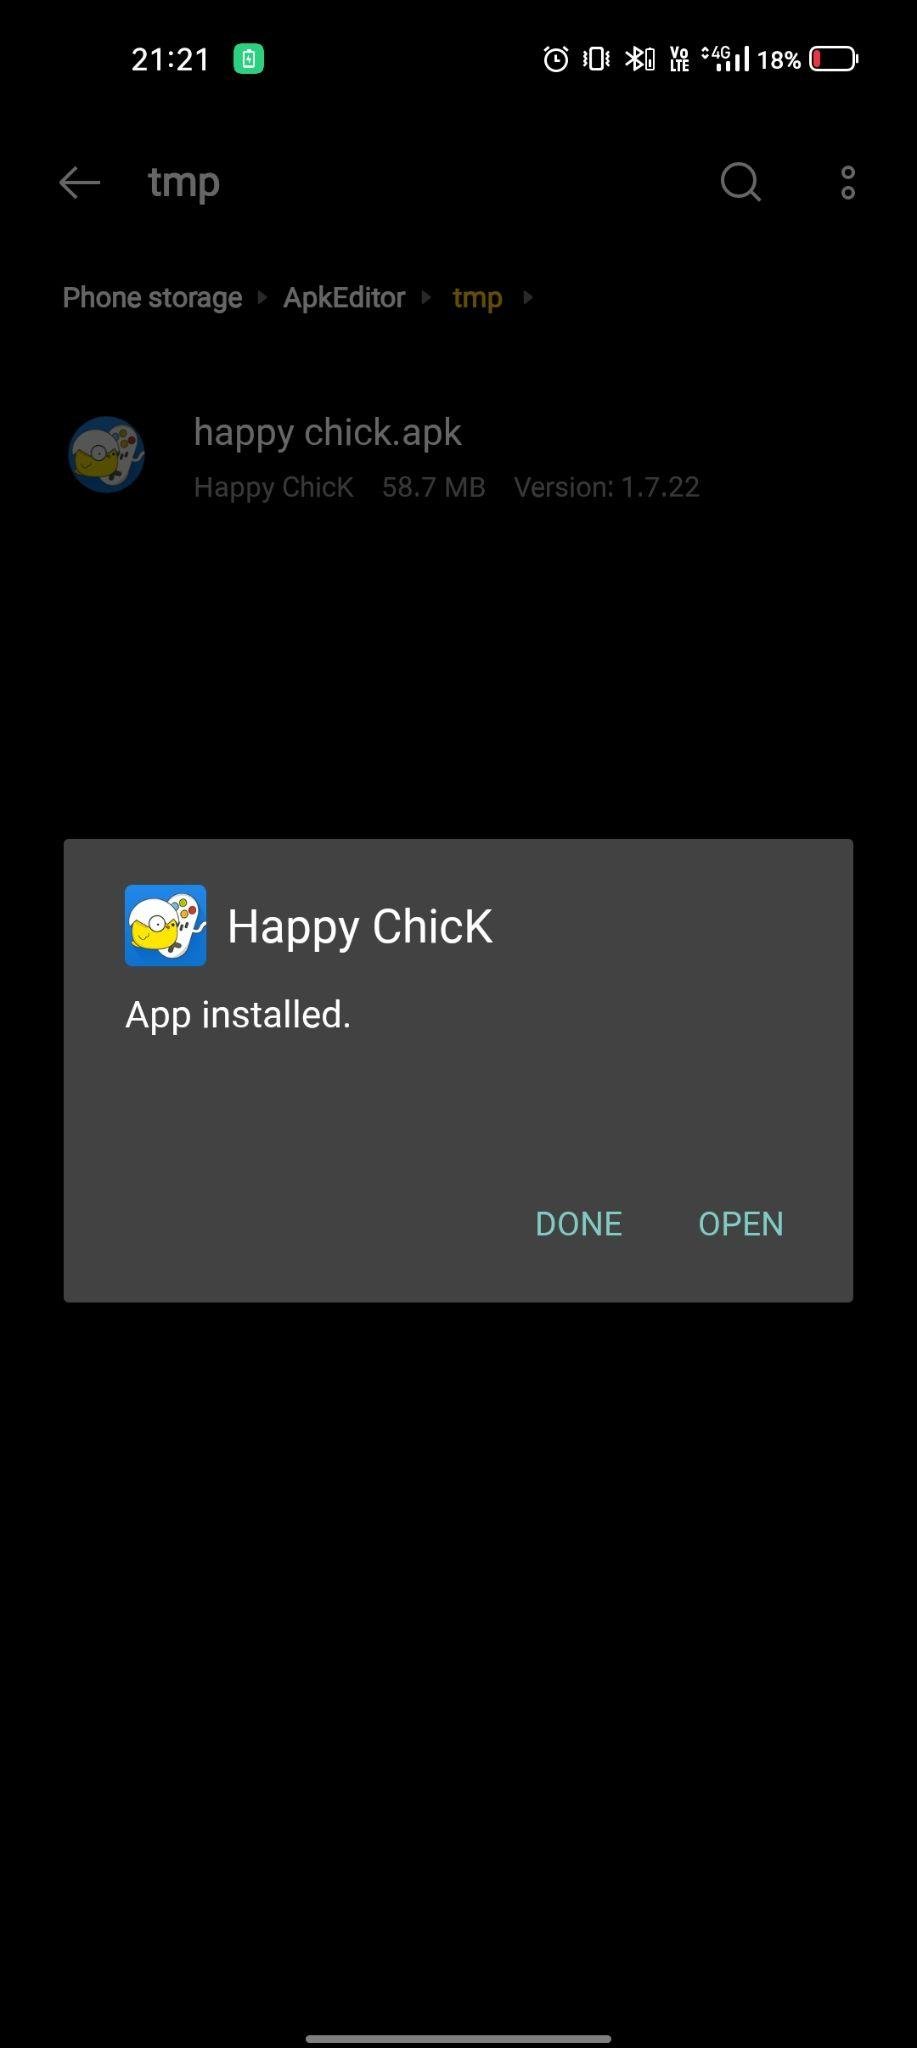 happy chick apk installed